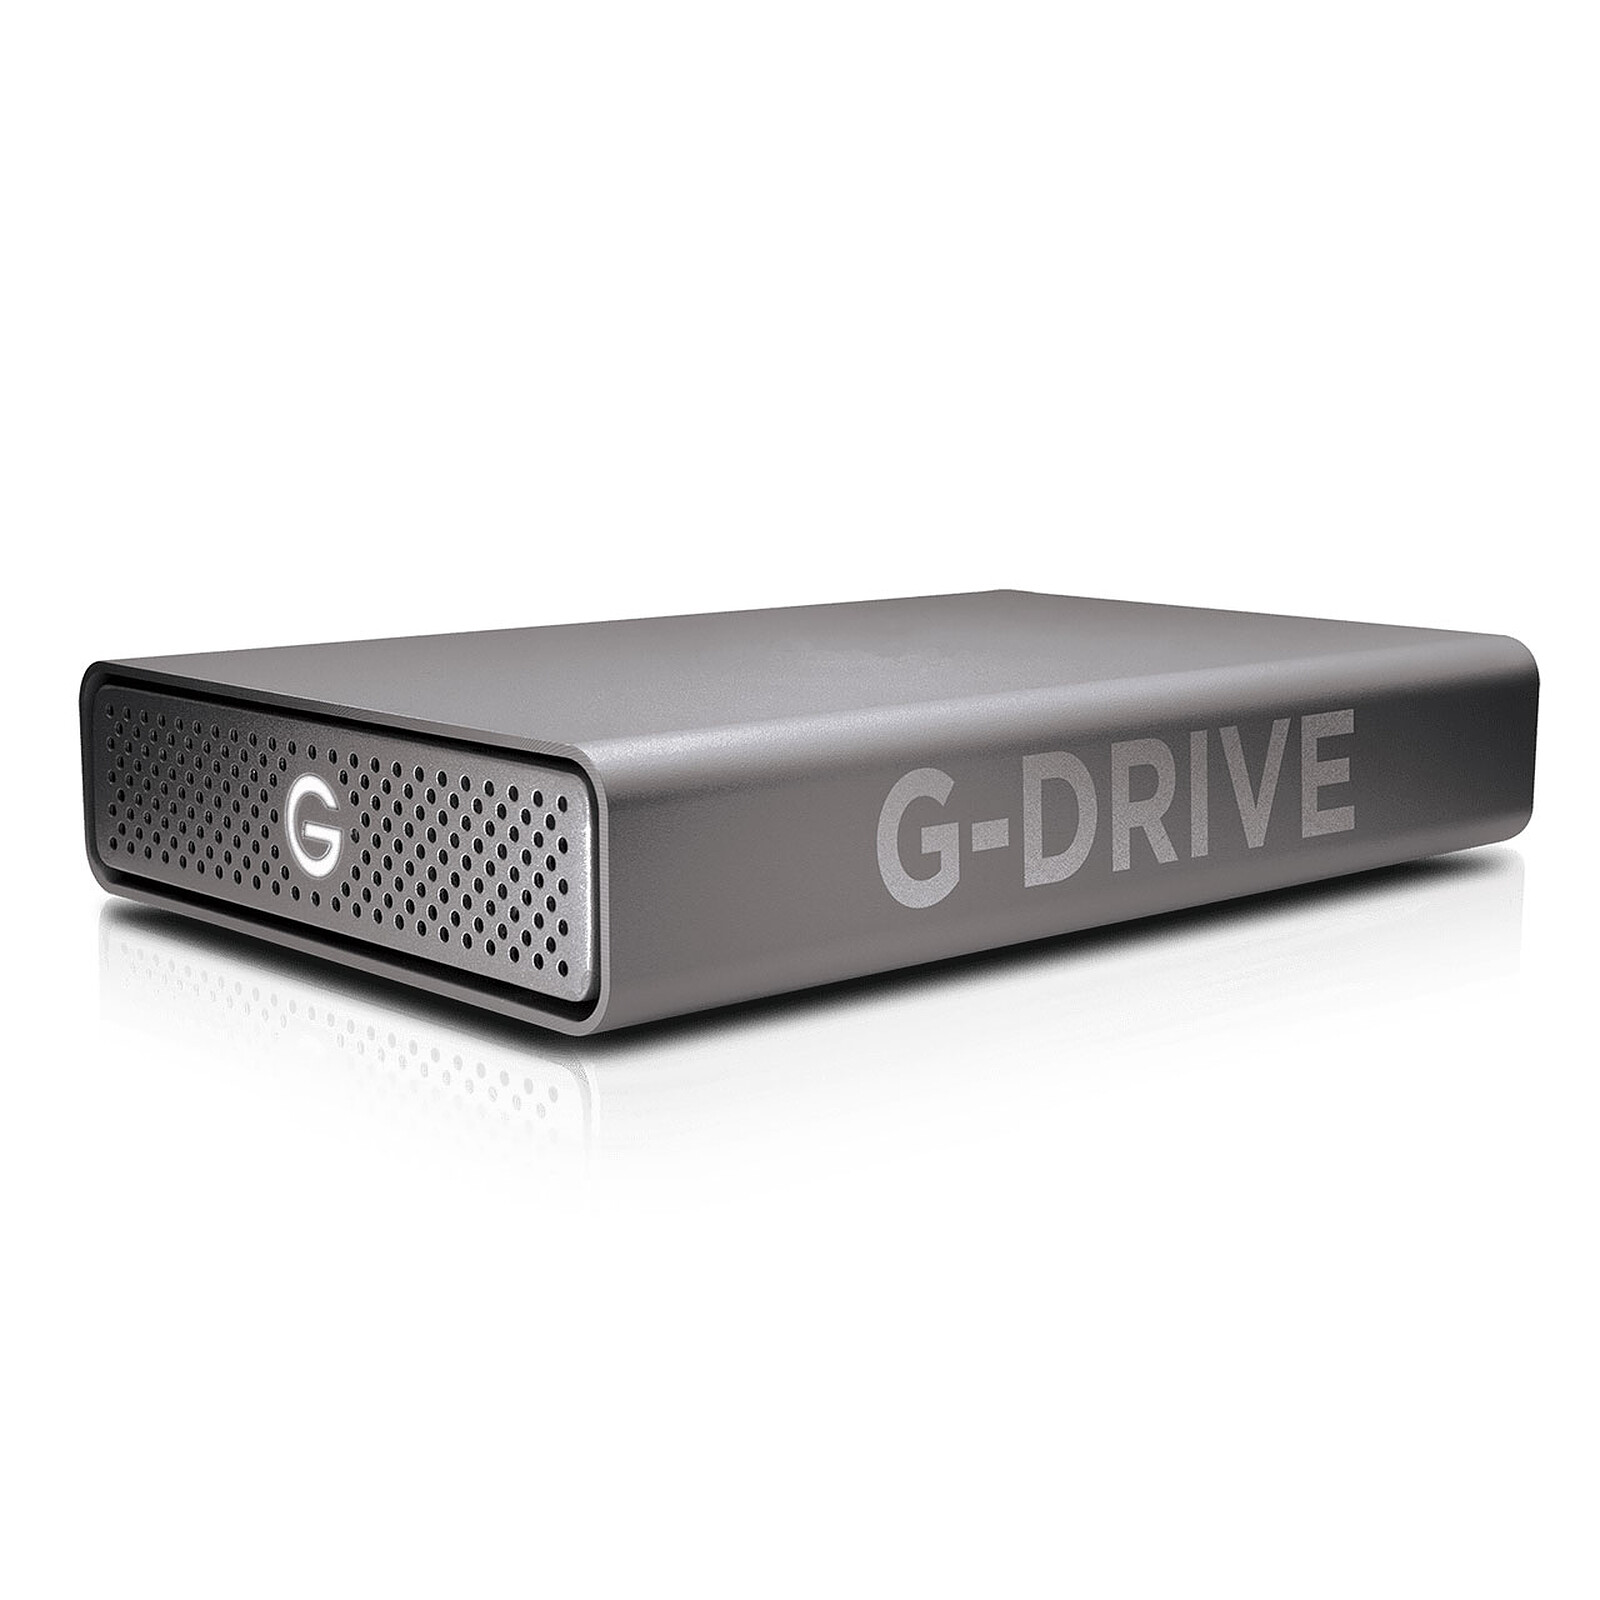 Disco duro profesional sobremesa G-Drive de 6 TB SanDisk - Disco duro externo SanDisk Professional en LDLC | ¡Musericordia!